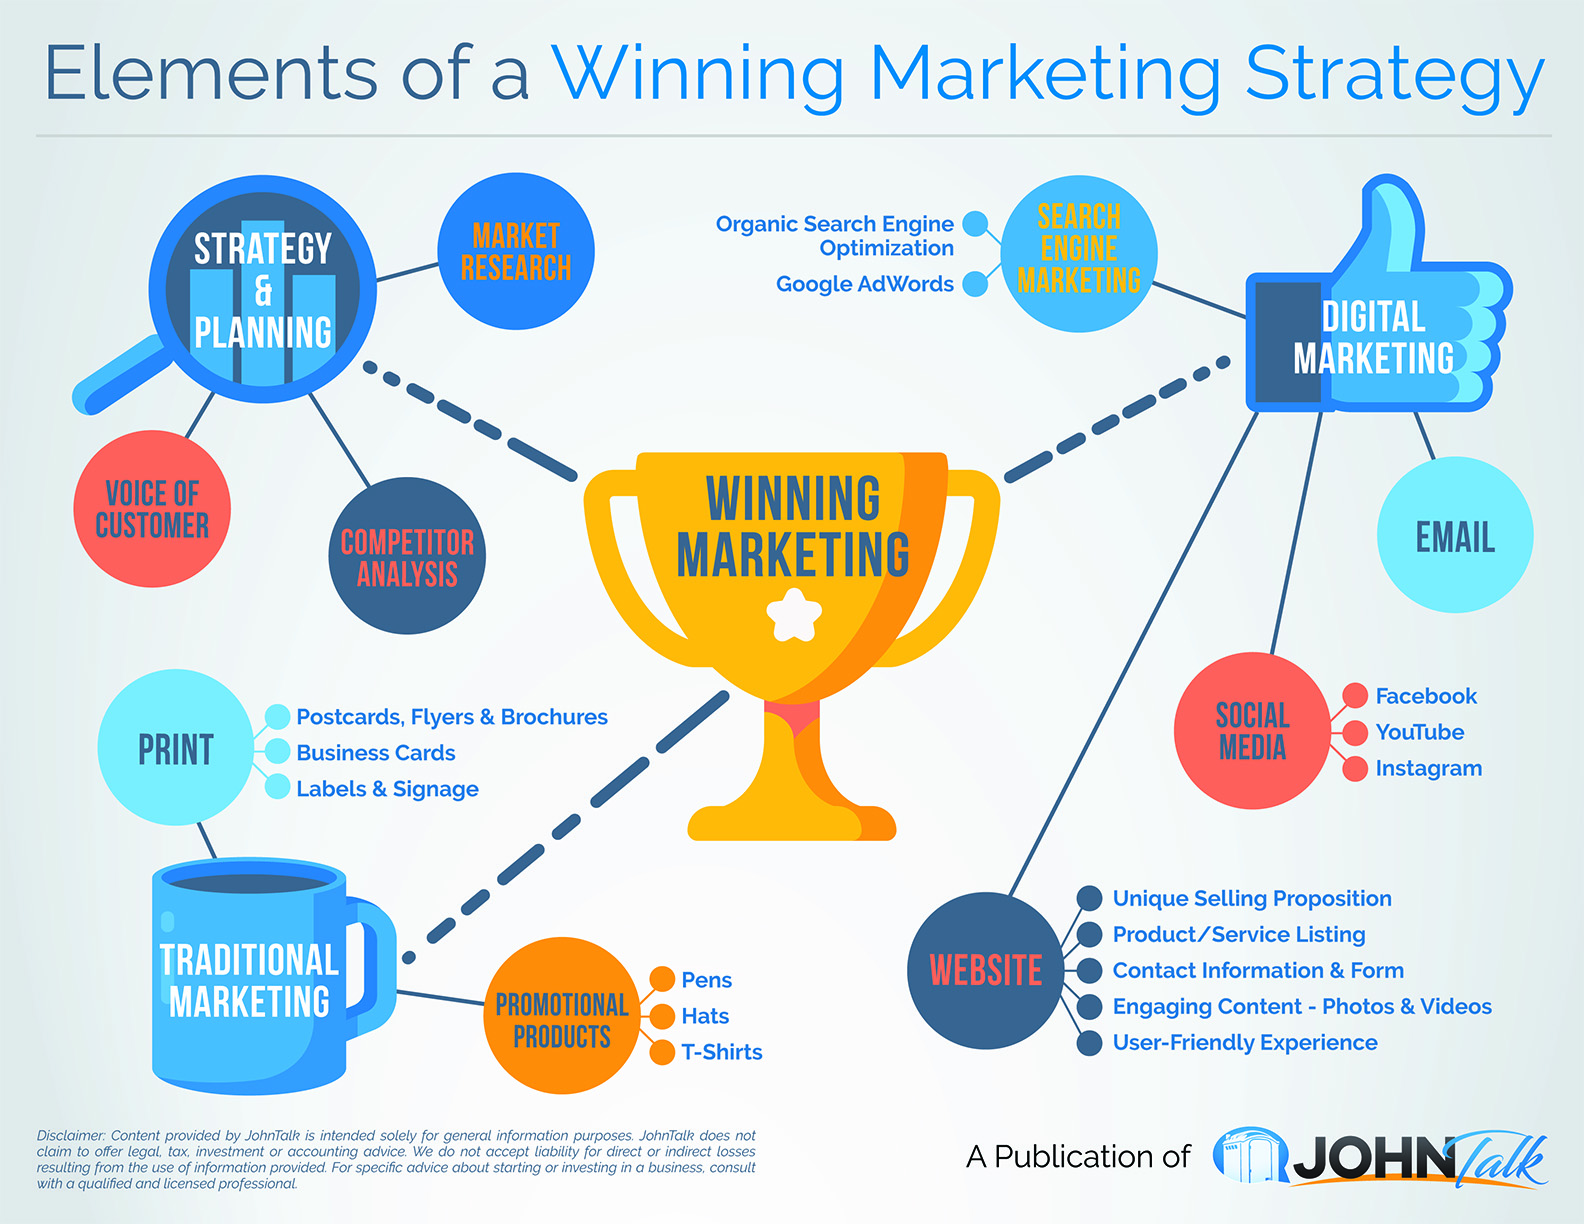 Elements of a Winning Marketing Strategy